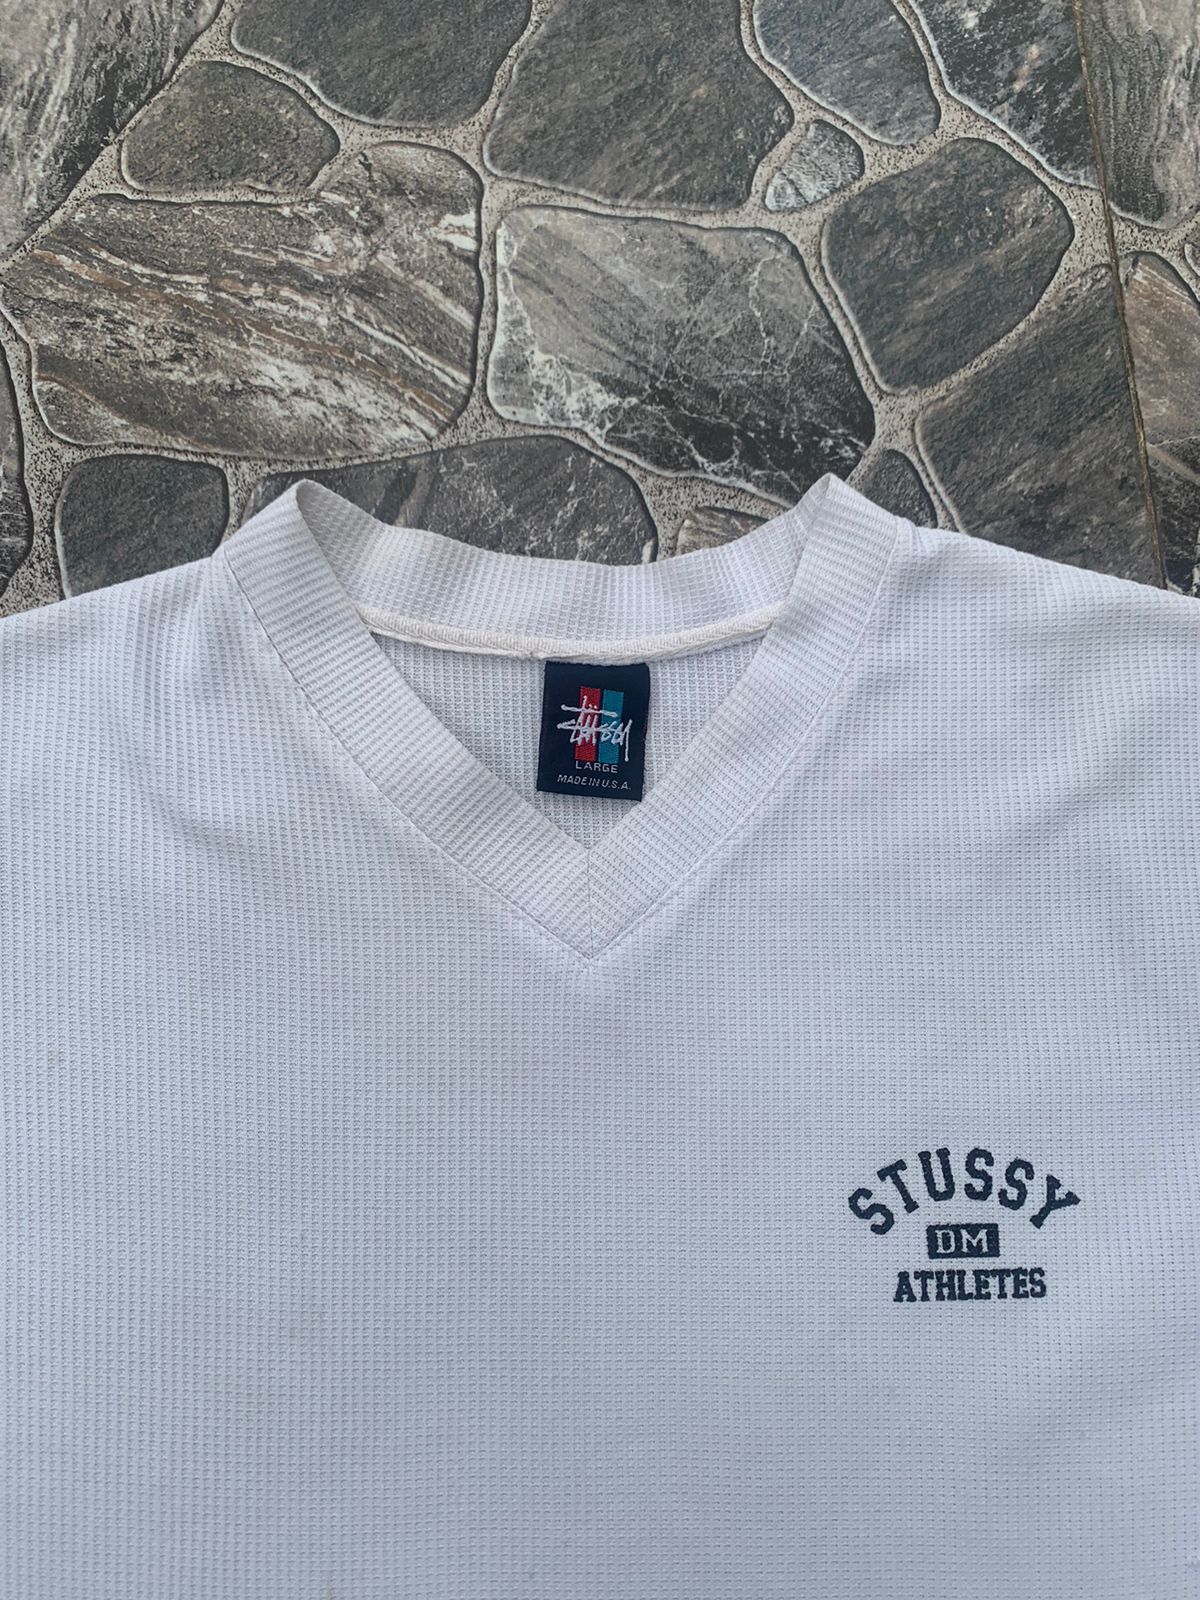 Vintage - Stussy DM Atheletes jersey white - 2